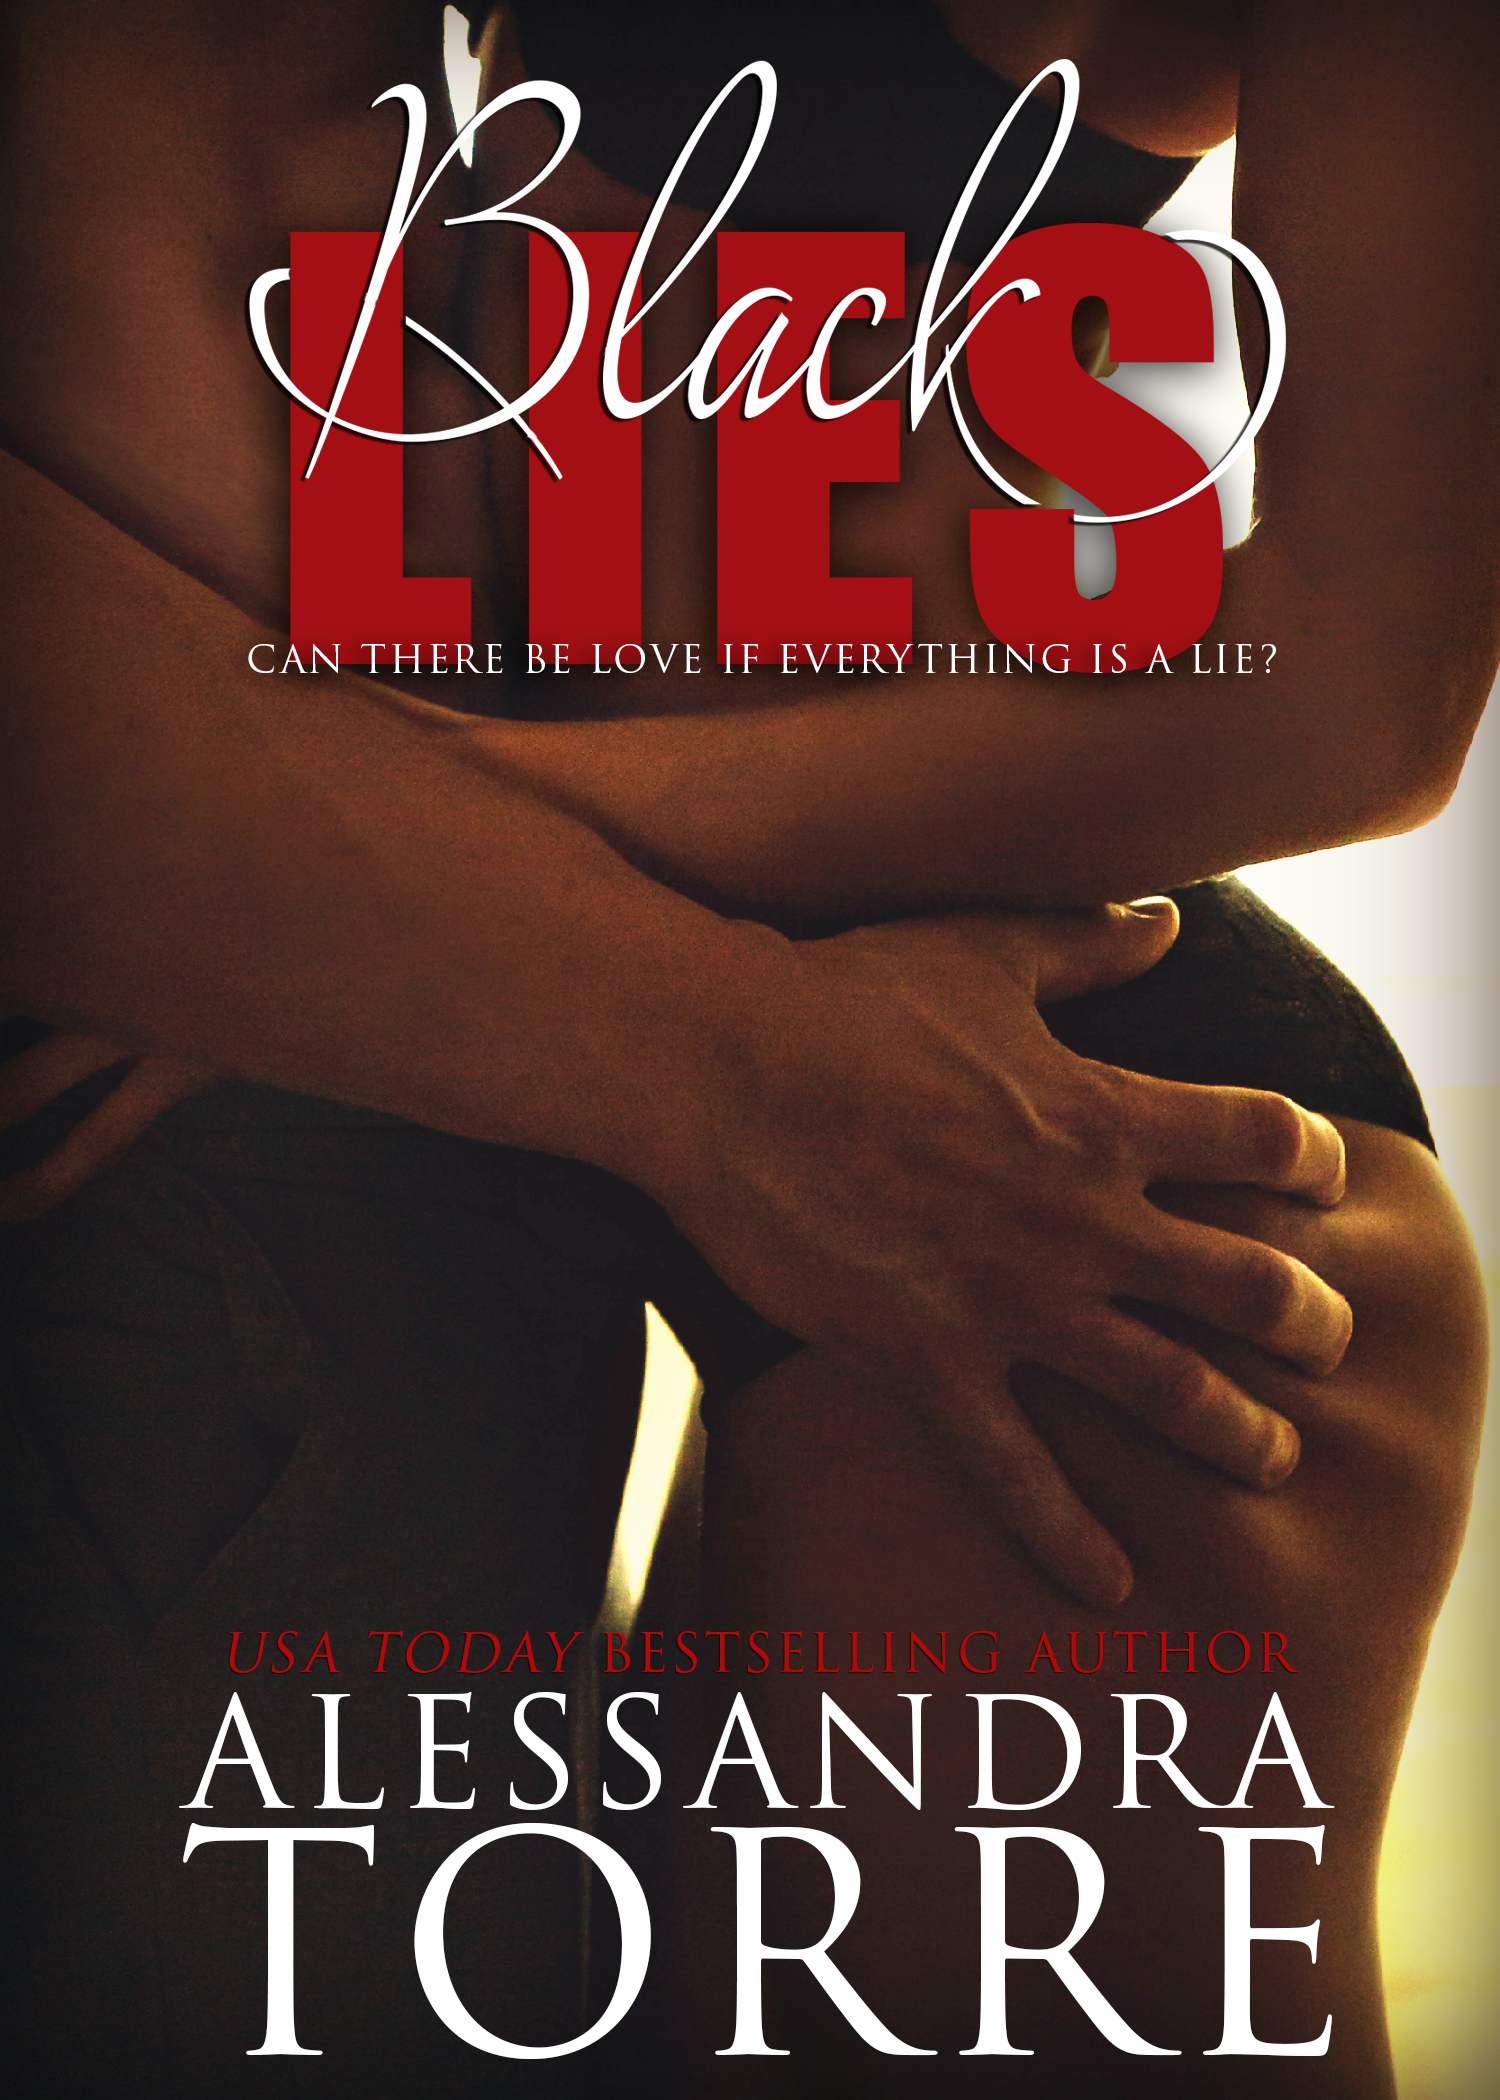 Black Lies by Alessandra Torre